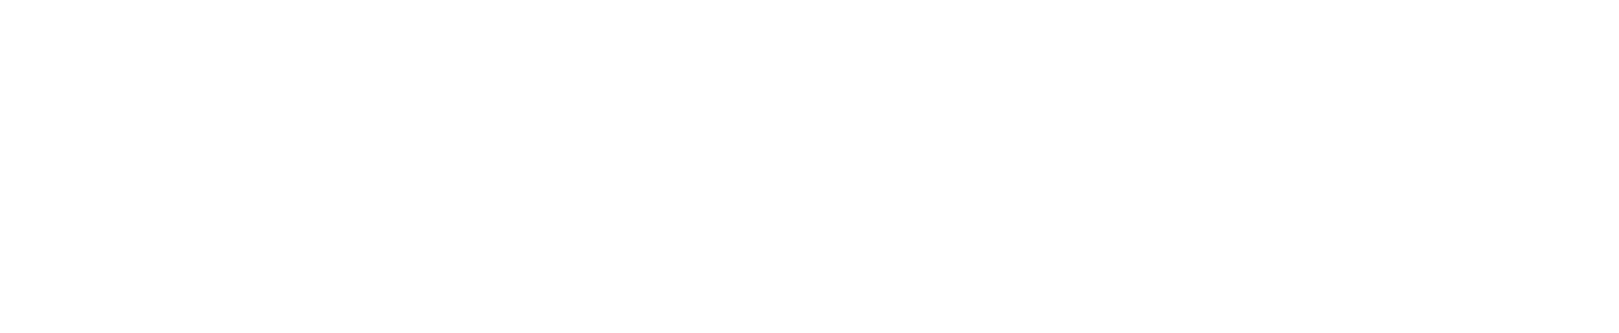 Energy Transfer Partners
 logo large for dark backgrounds (transparent PNG)